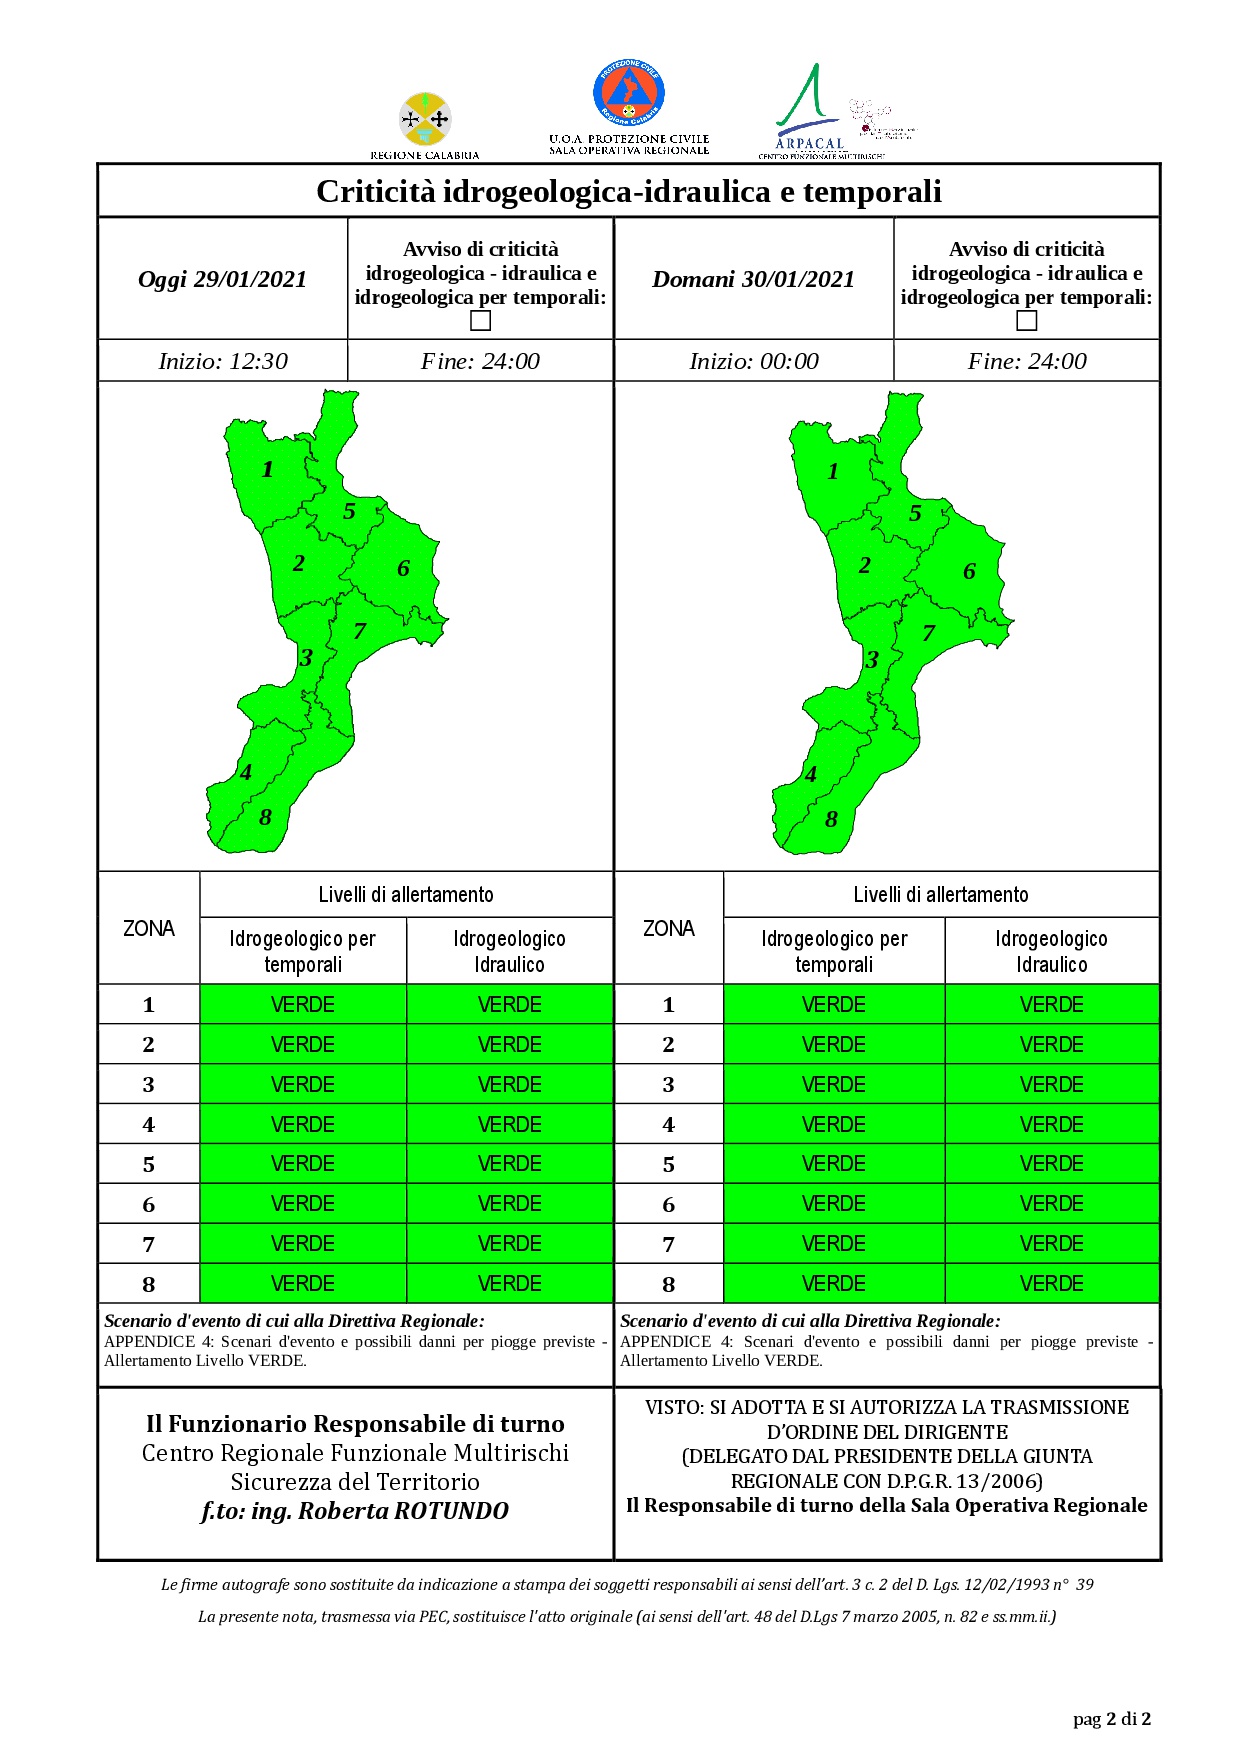 Criticità idrogeologica-idraulica e temporali in Calabria 29-01-2021